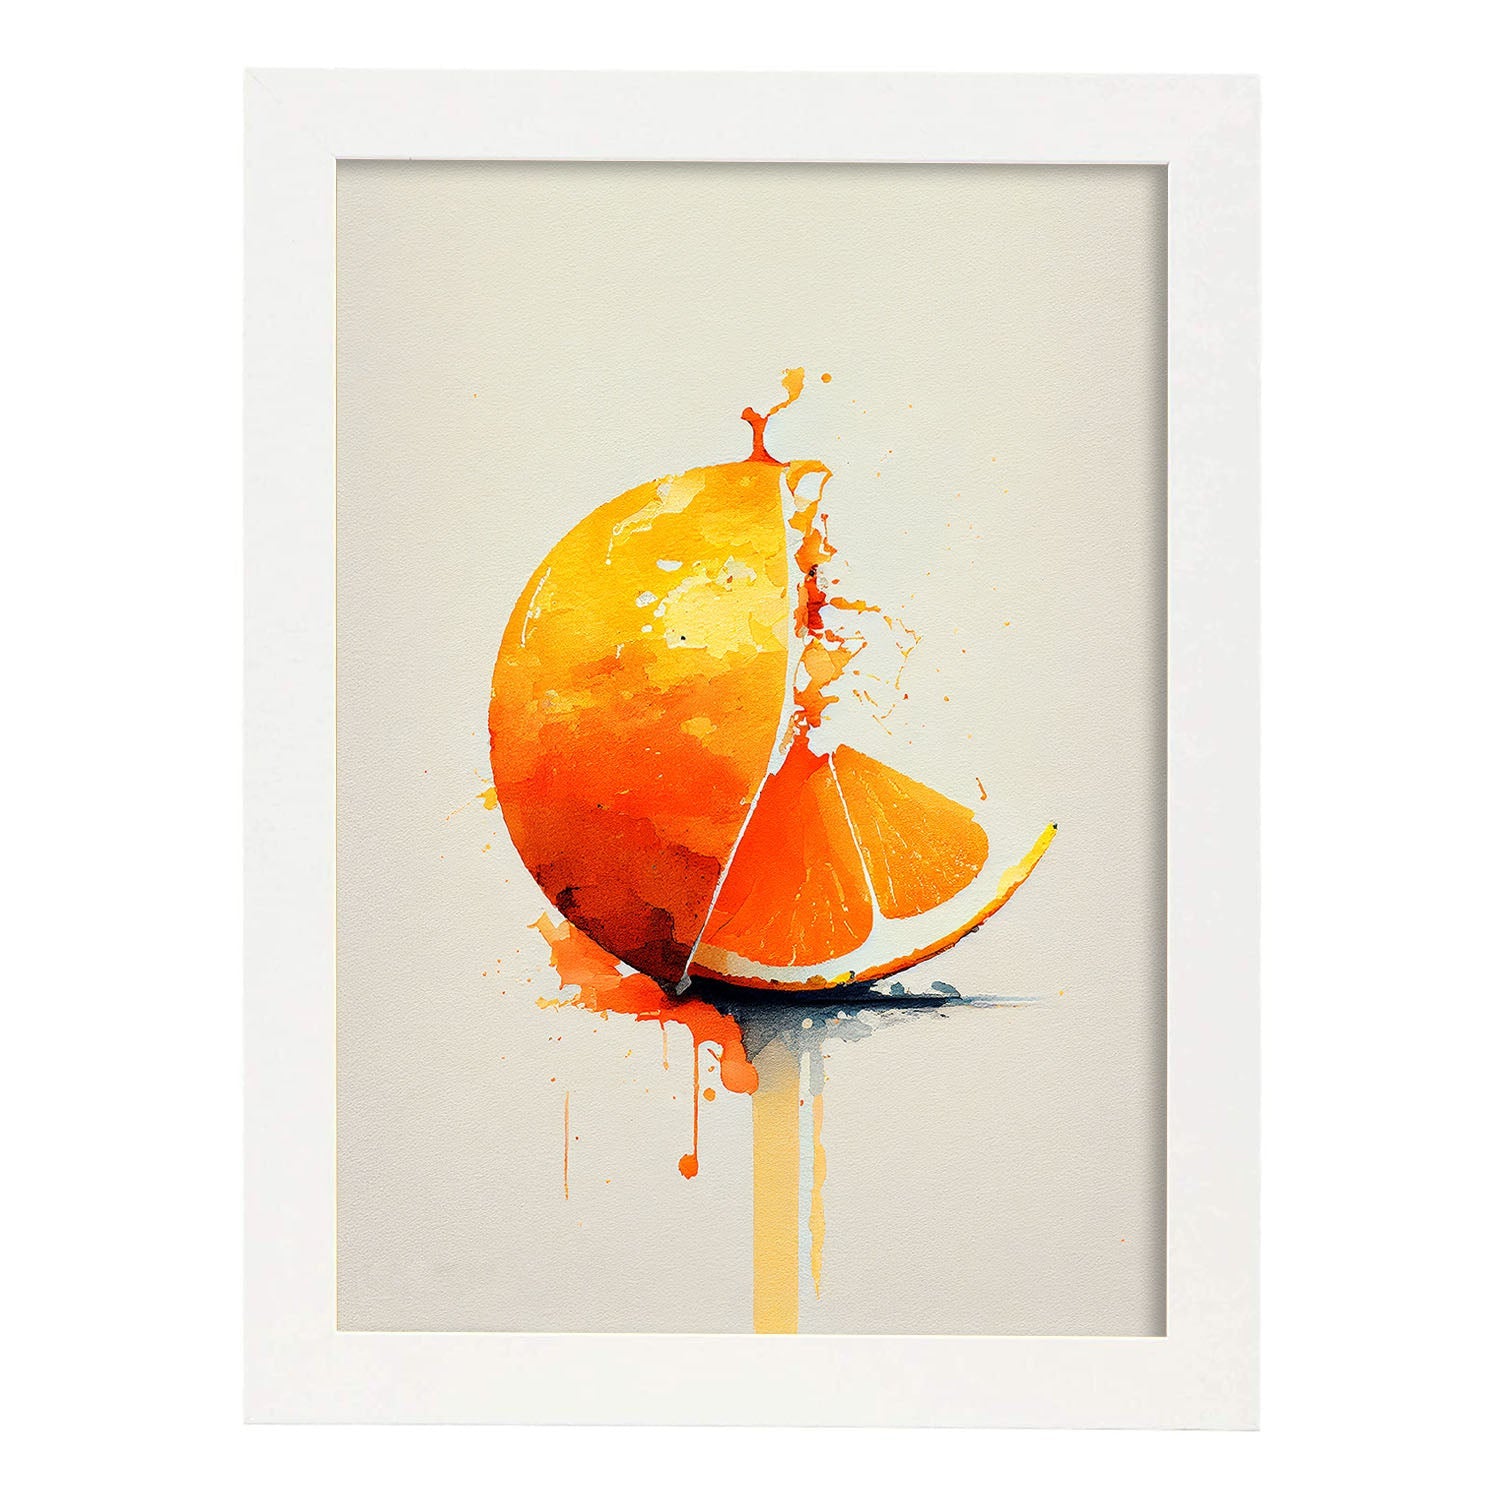 Nacnic minimalist Orange_1. Aesthetic Wall Art Prints for Bedroom or Living Room Design.-Artwork-Nacnic-A4-Marco Blanco-Nacnic Estudio SL